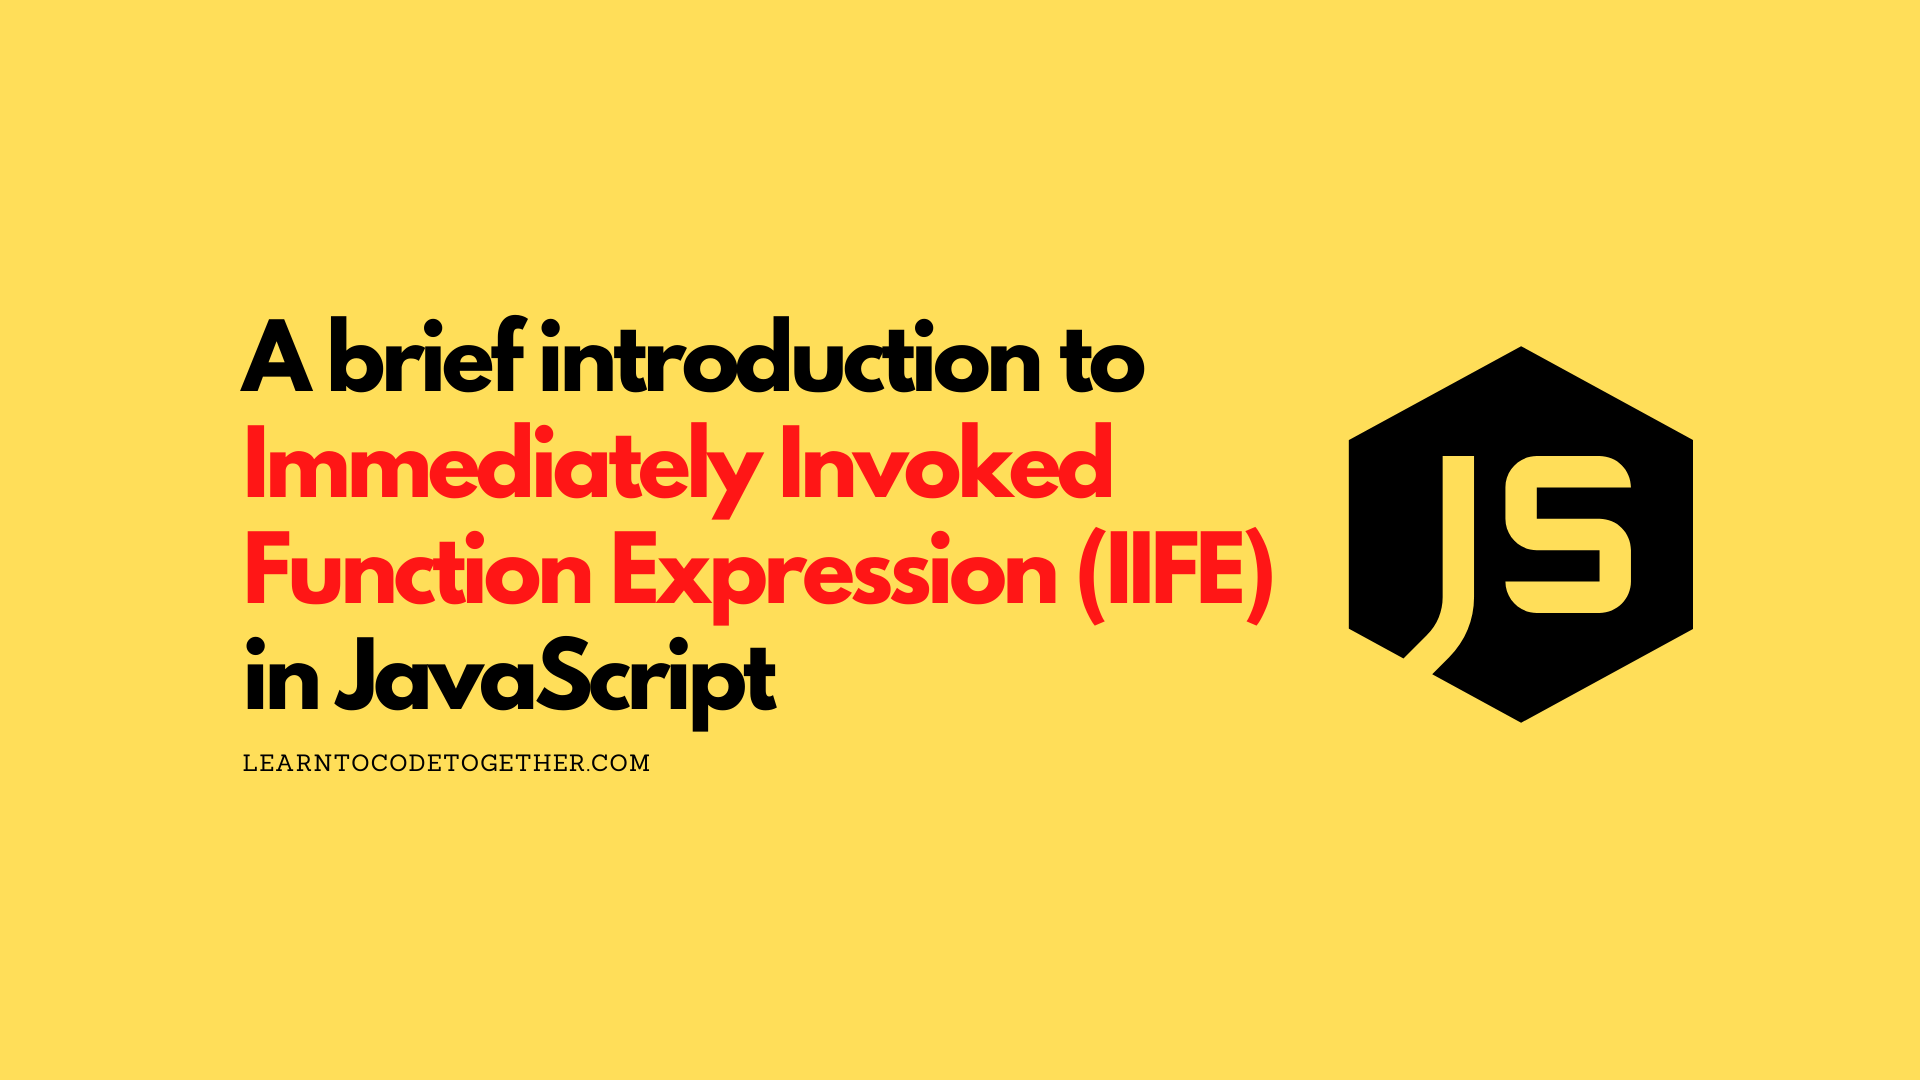 Immediately invoked function expression js. Iife JAVASCRIPT. Function expression JAVASCRIPT. Iife js это.